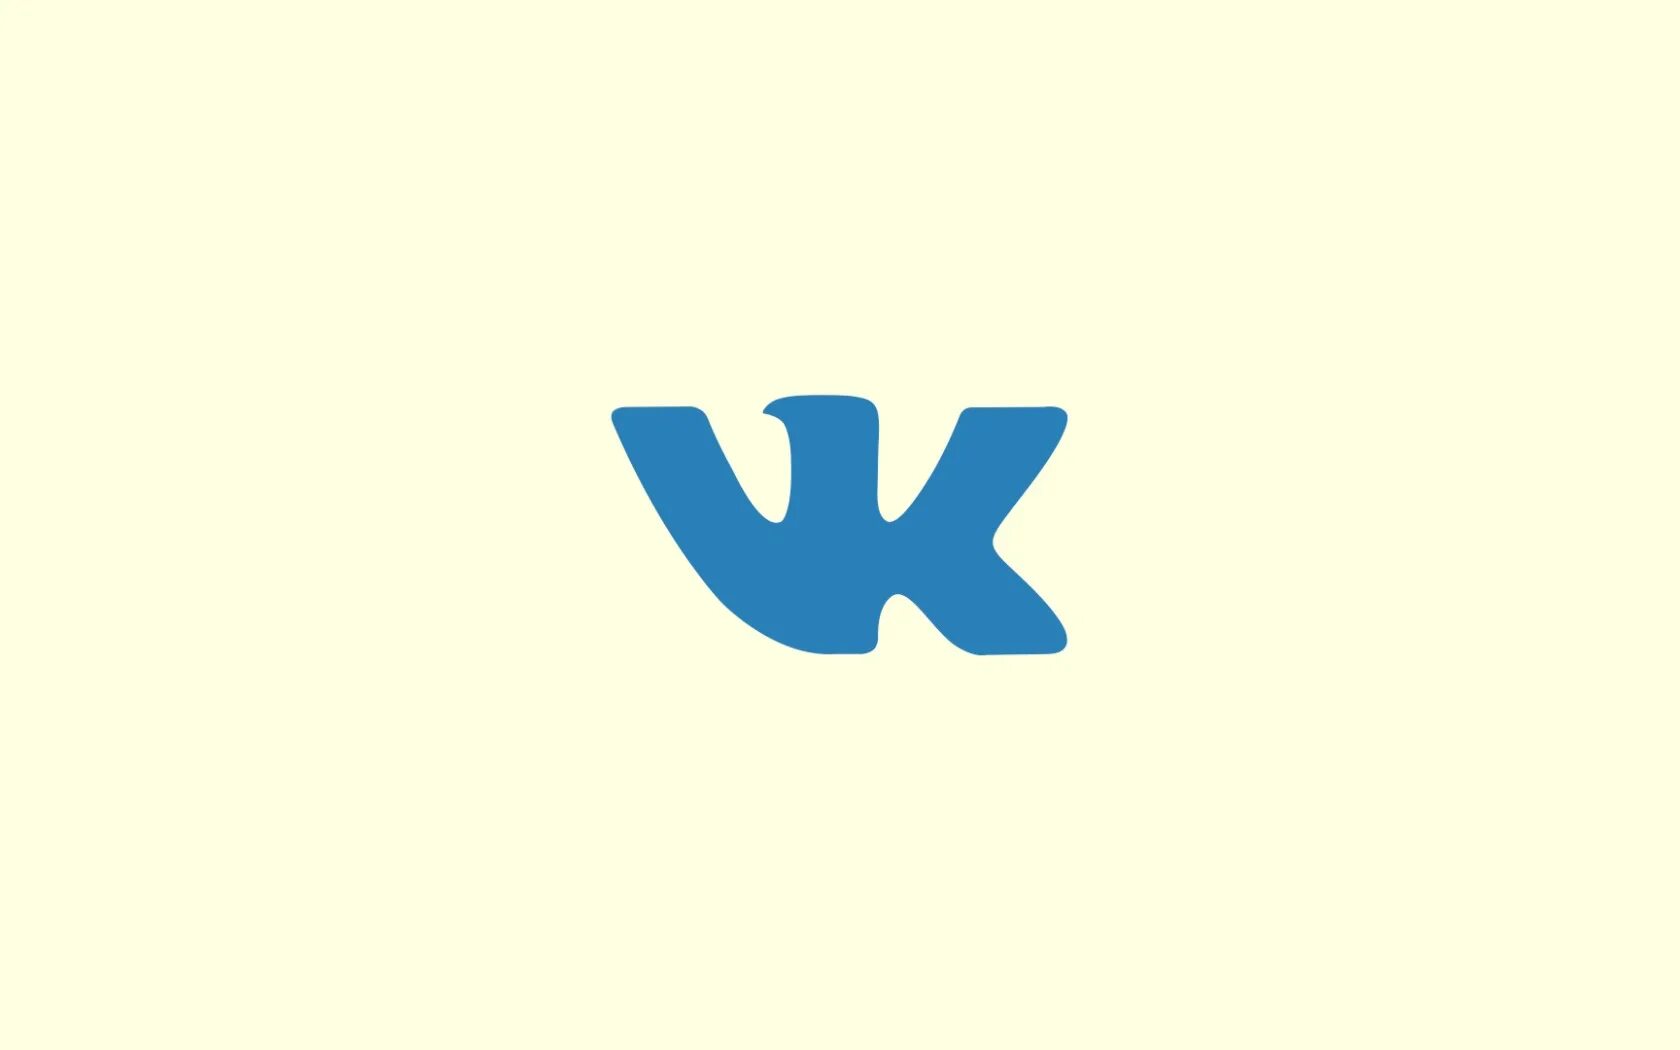 Vk andrekoltsov. Логотип ВК. Маленький значок ВК. Значок ВКОНТАКТЕ на прозрачном фоне. Значок ВК без фона.